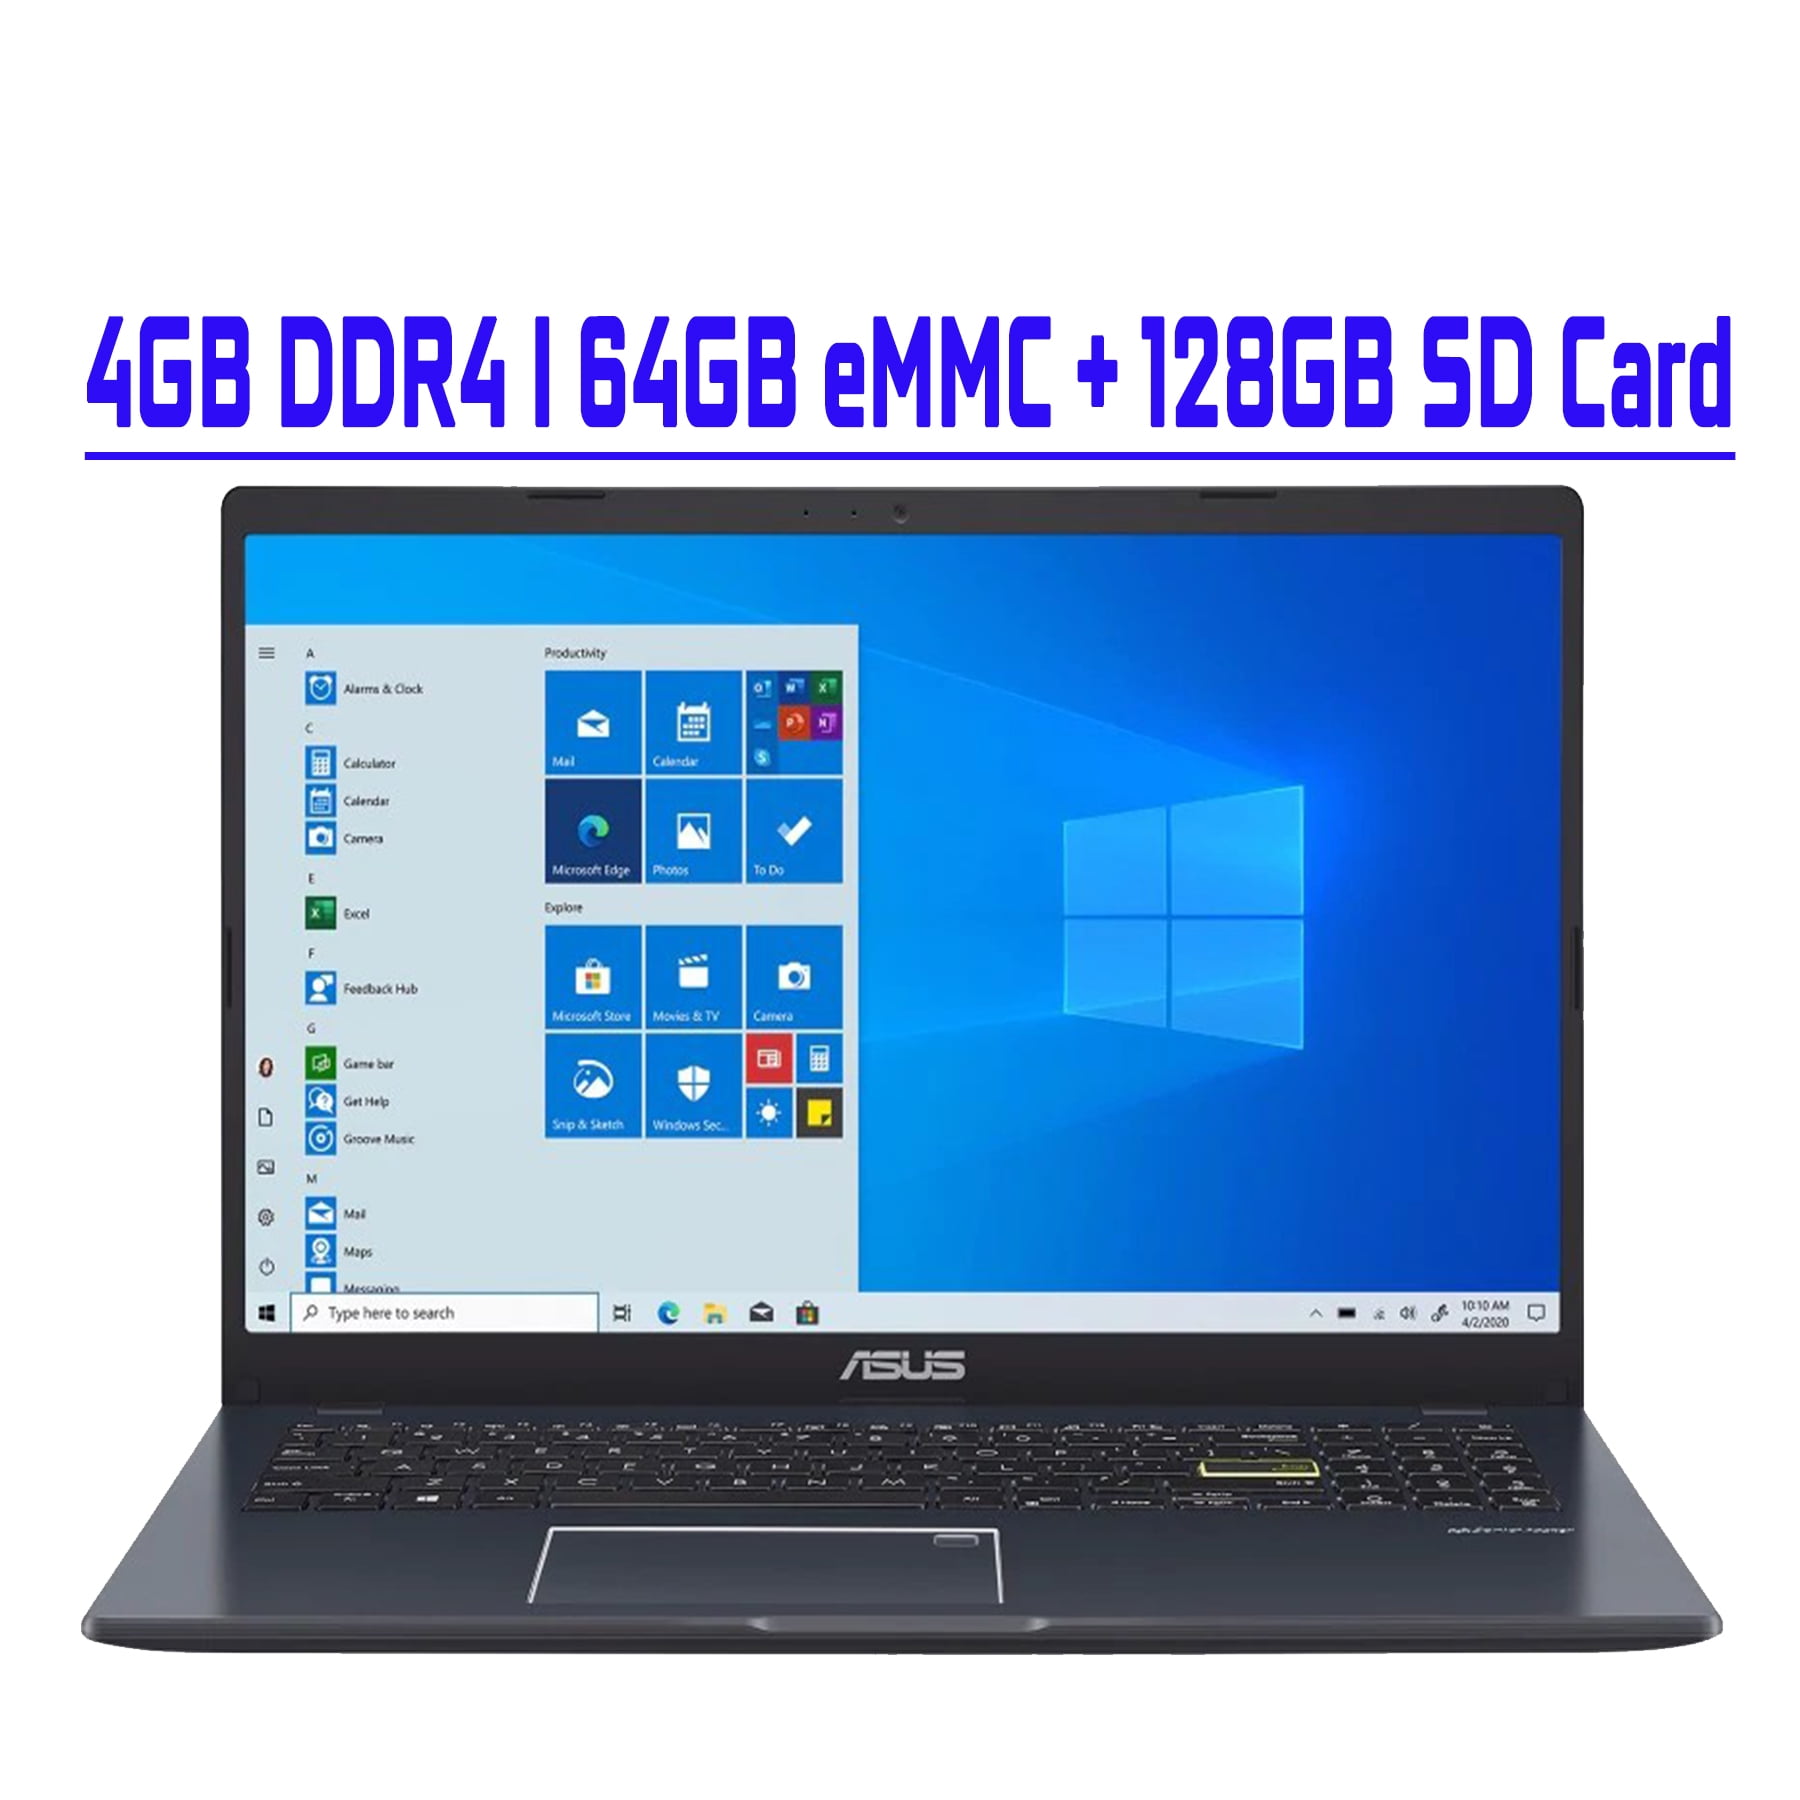 Asus Vivobook L510 Ultra Thin Premium Business Laptop 15.6” FHD Display  Intel Celeron N4020 4GB DDR4 64GB eMMC + 128GB SD Card Intel UHD Graphics  